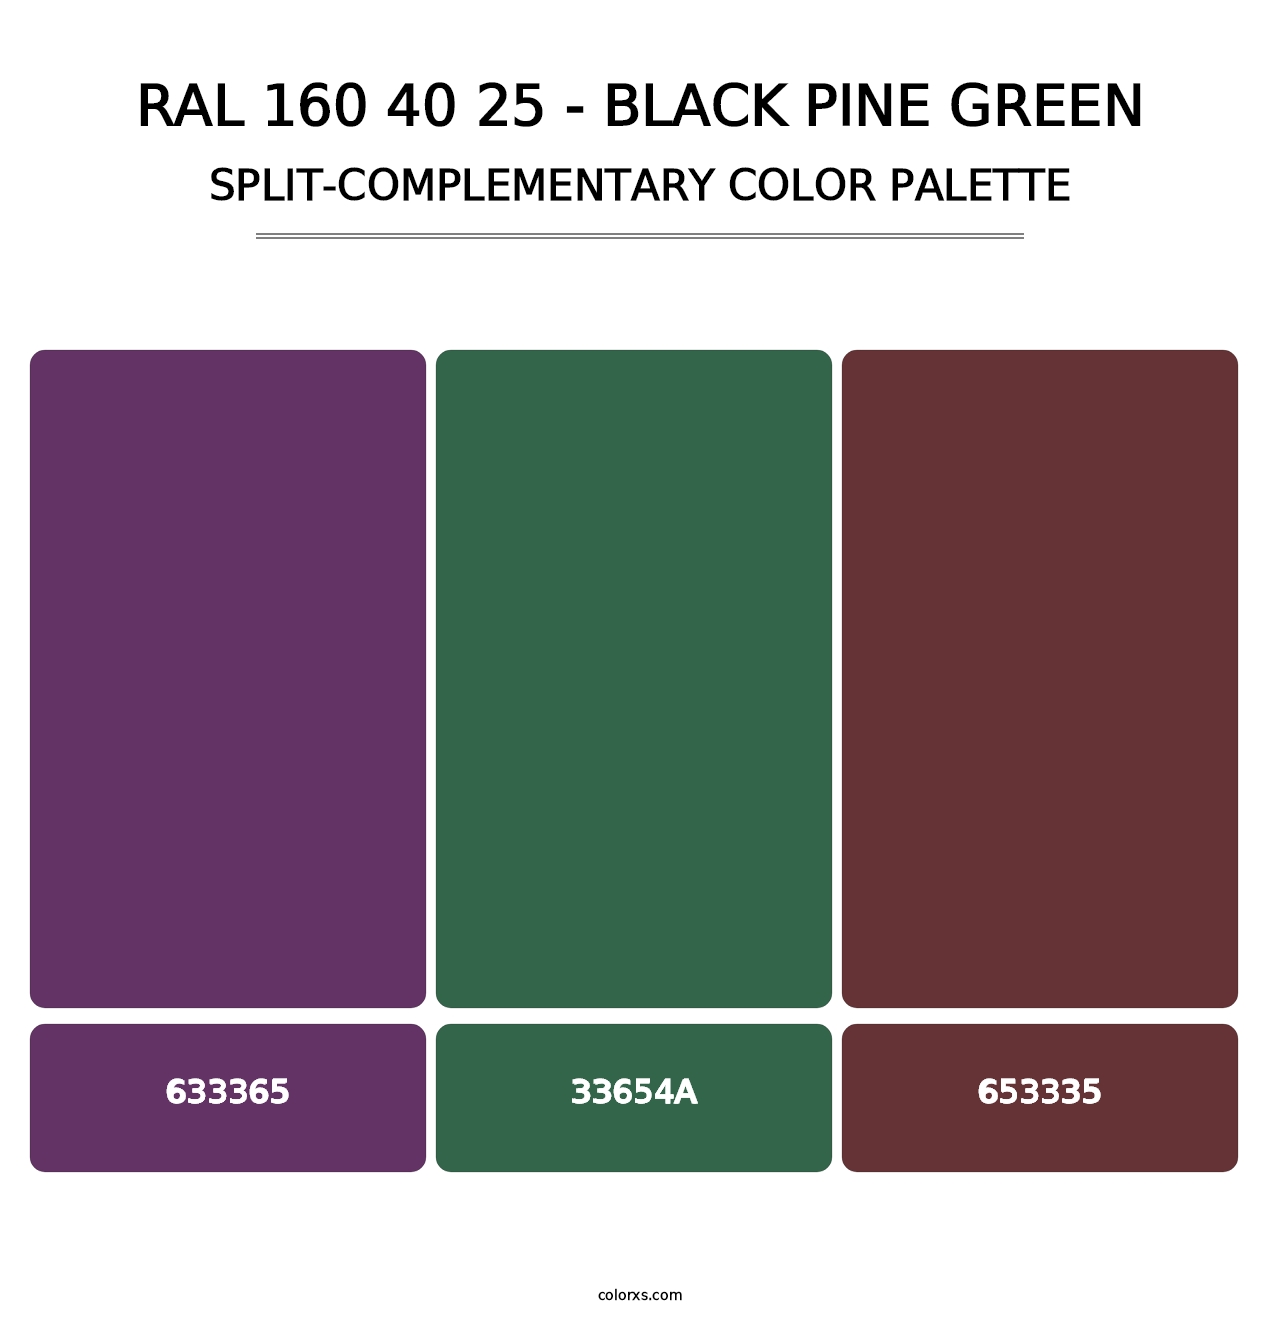 RAL 160 40 25 - Black Pine Green - Split-Complementary Color Palette